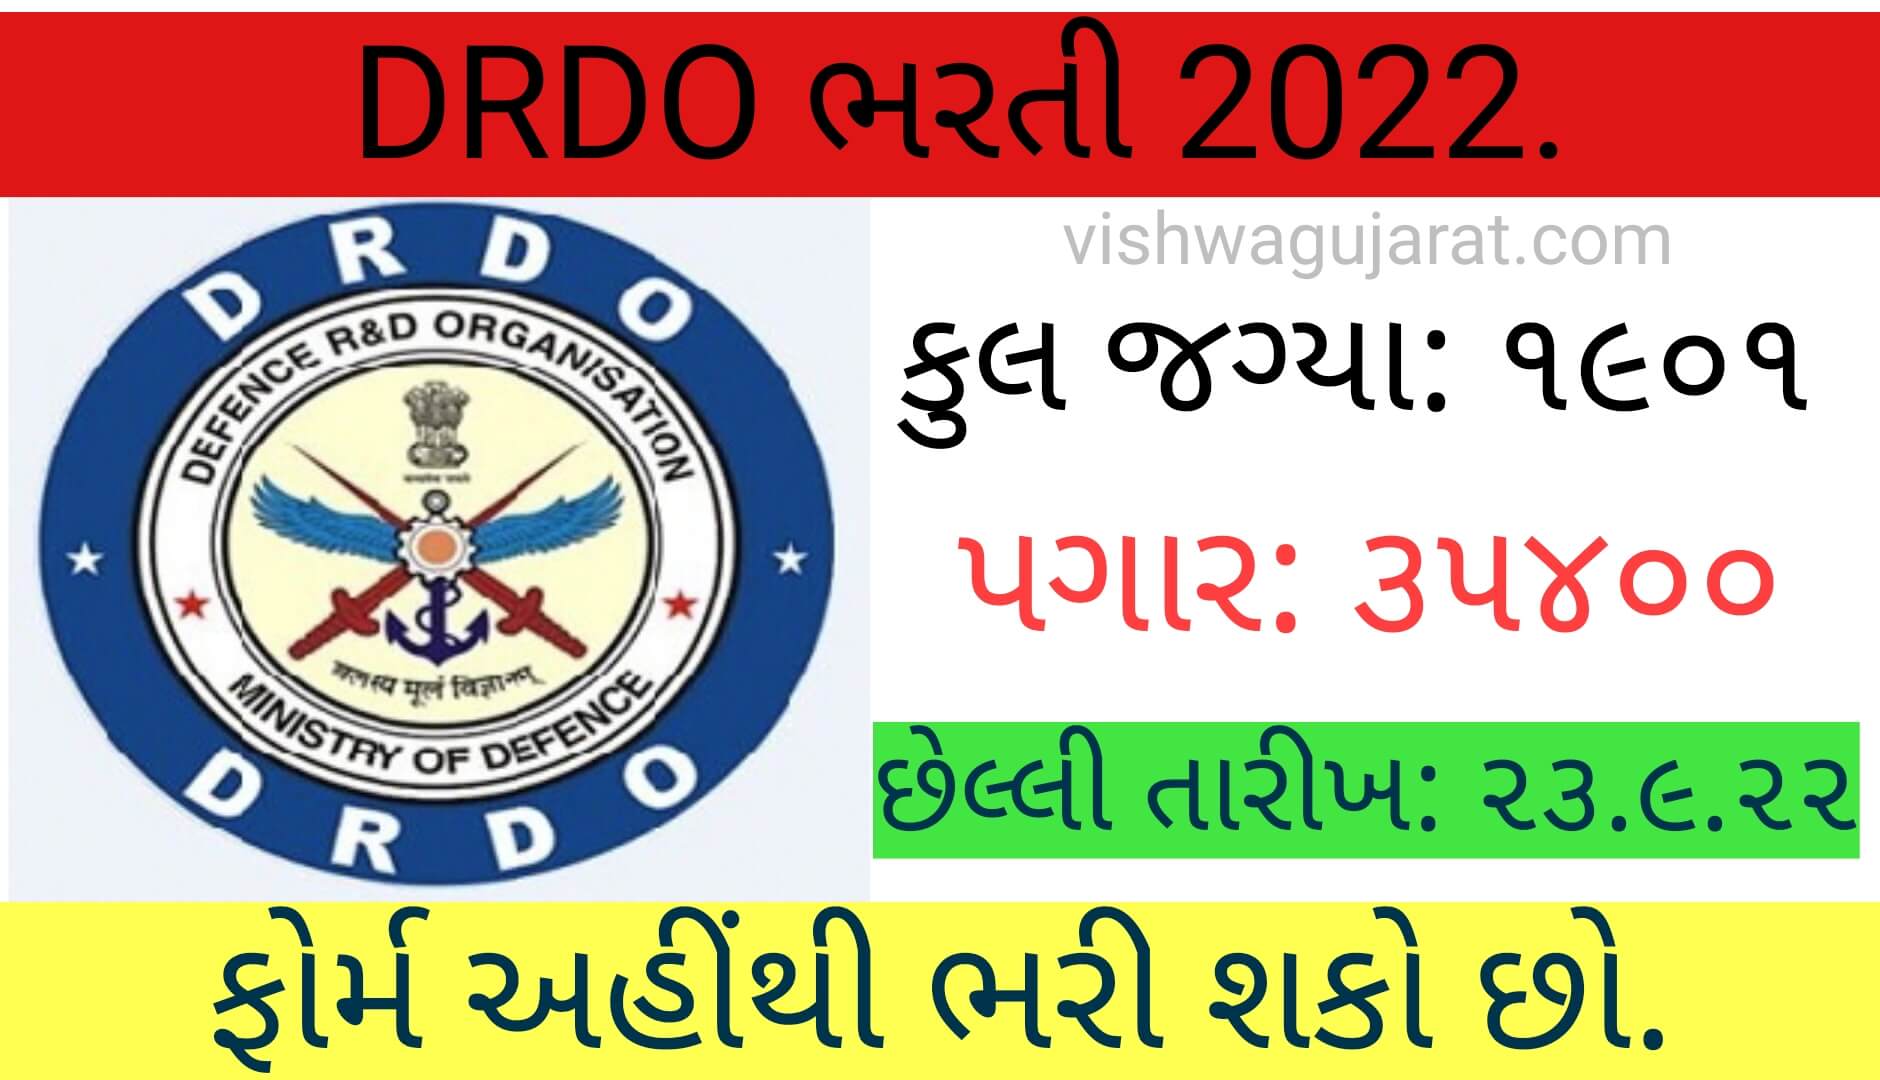 DRDO ભરતી 2022: 1900 થી વધુ જગ્યાઓ માટે બમ્પર ખાલી જગ્યાઓ, દર મહિને રૂ. 1,12,400 સુધીનો પગાર